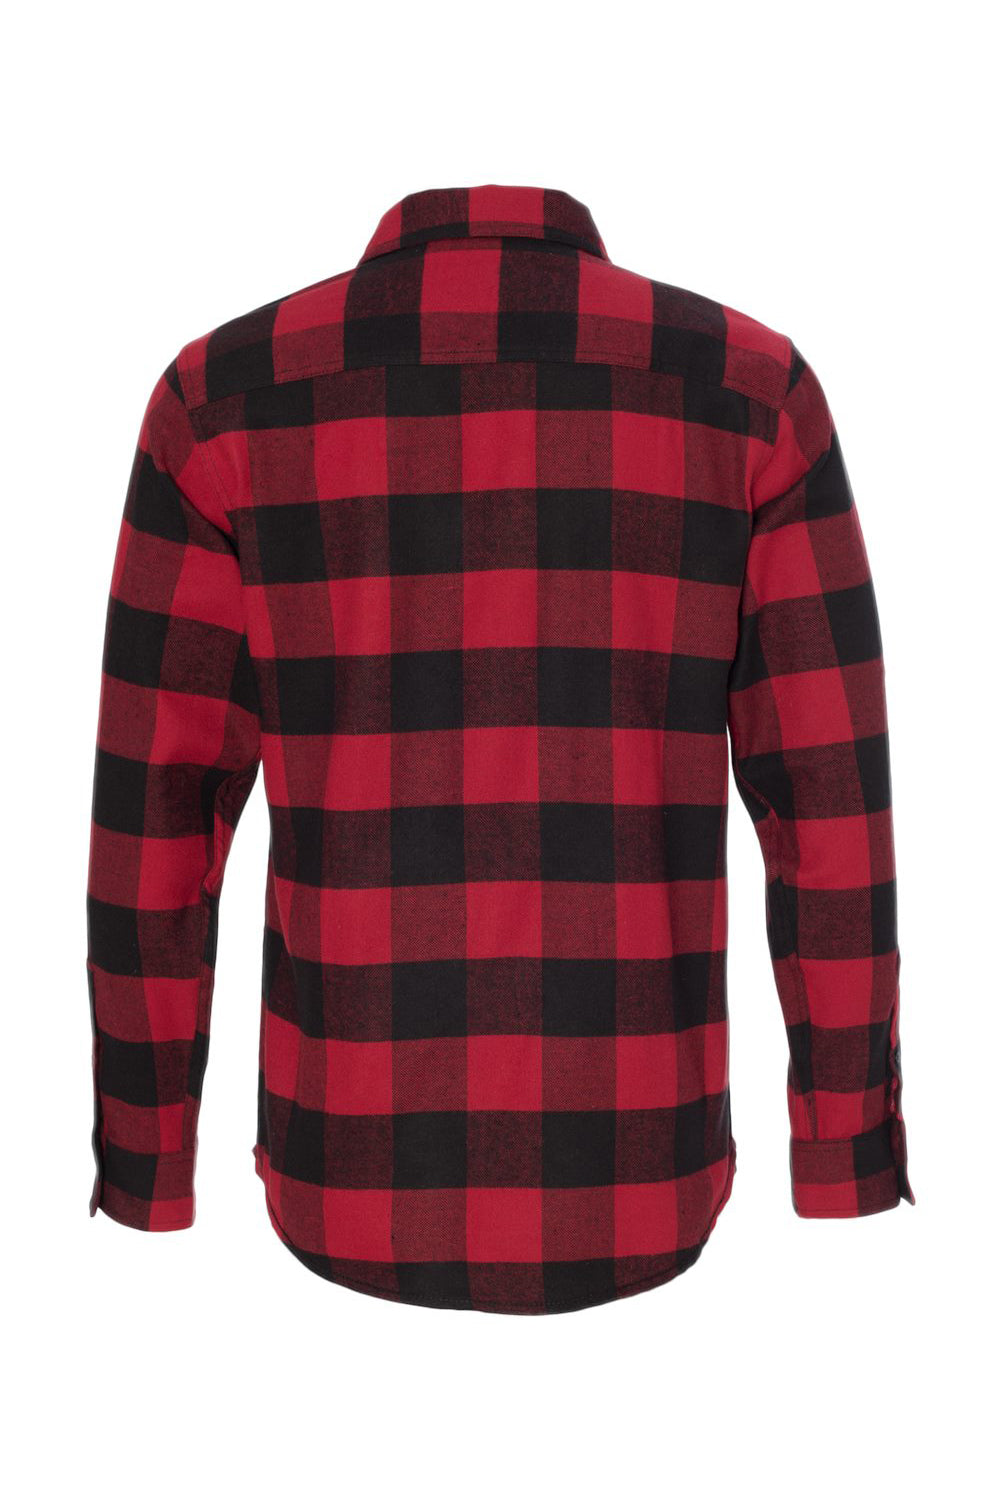 Burnside B8210/8210 Mens Flannel Long Sleeve Button Down Shirt w/ Double Pockets Red/Black Flat Back